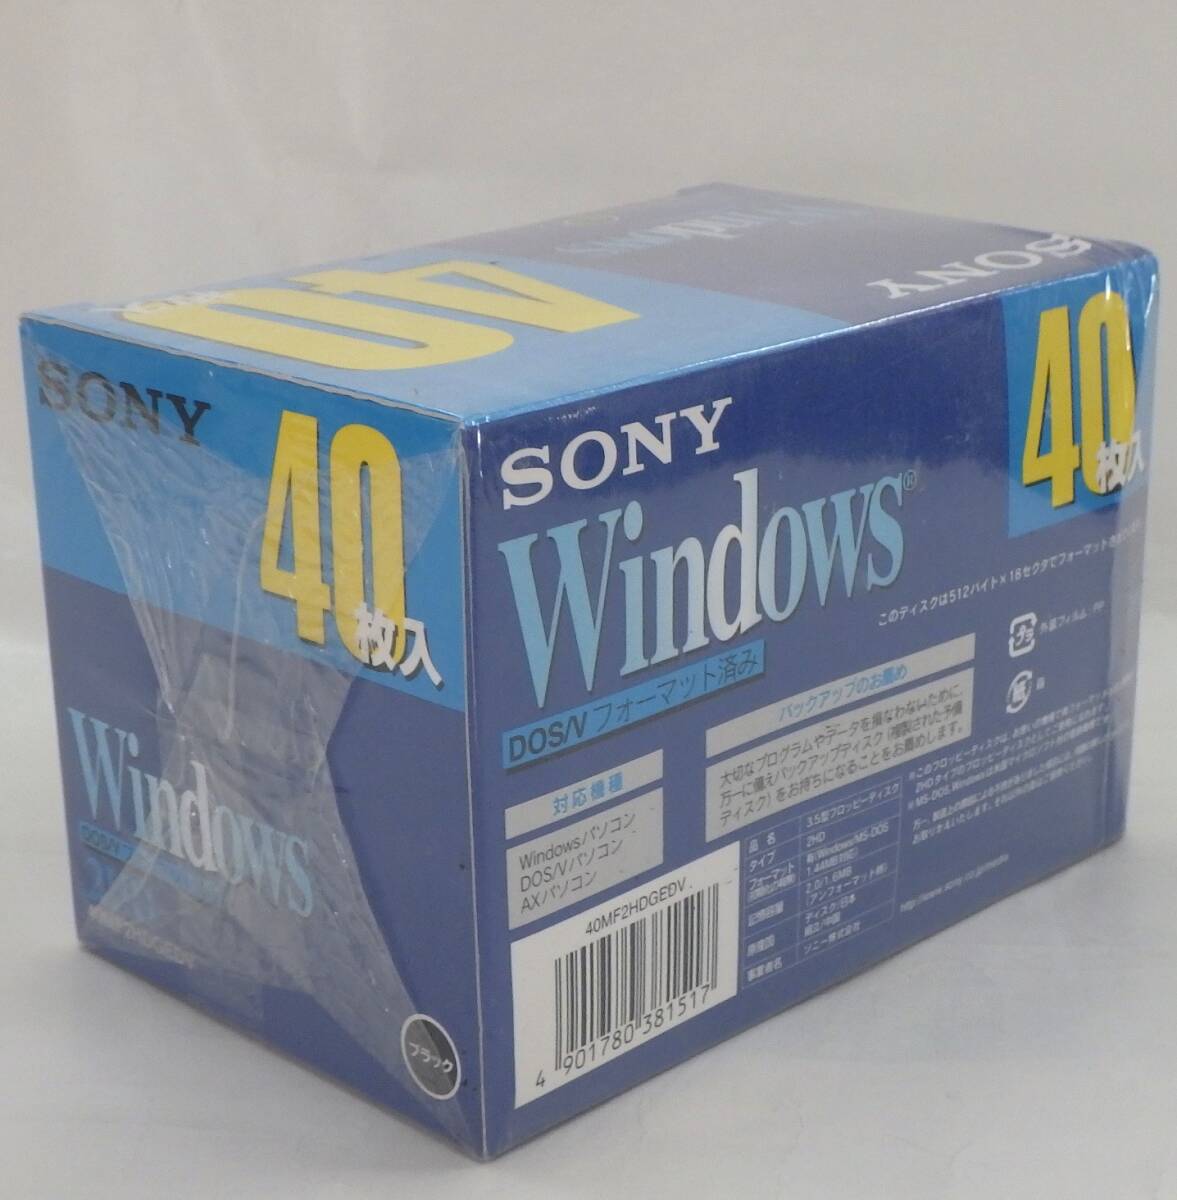 [ unopened ]SONY/ Sony 3.5 type 2HD floppy disk 40 sheets insertion 40MF2HDGEDV DOS/V format ending 